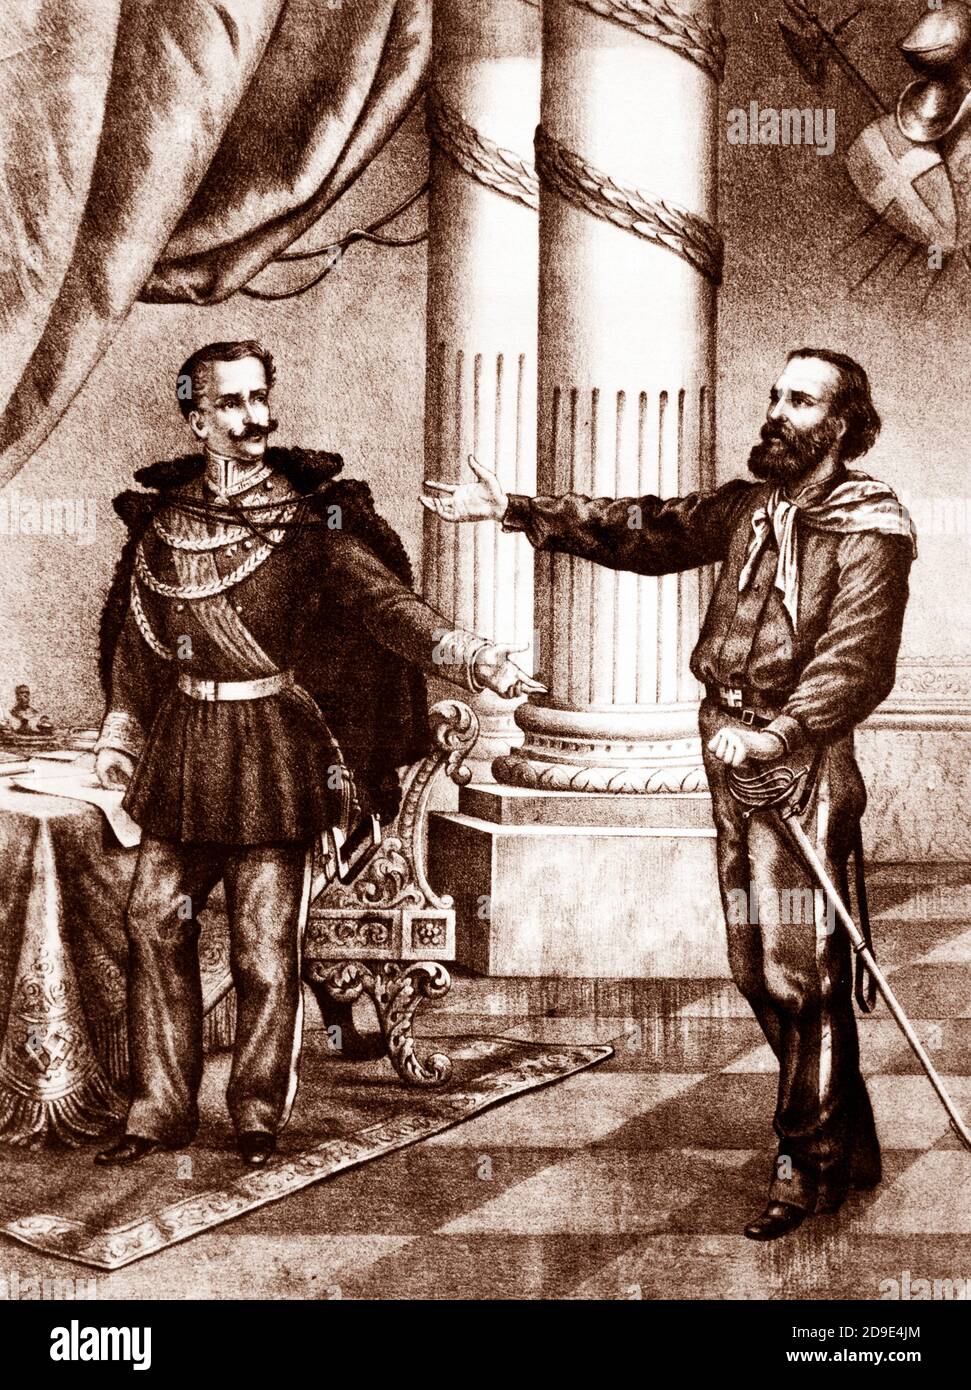 Encuentro entre carlo alberto di savoia y giuseppe garibaldi a roverbella, 1848 Foto de stock